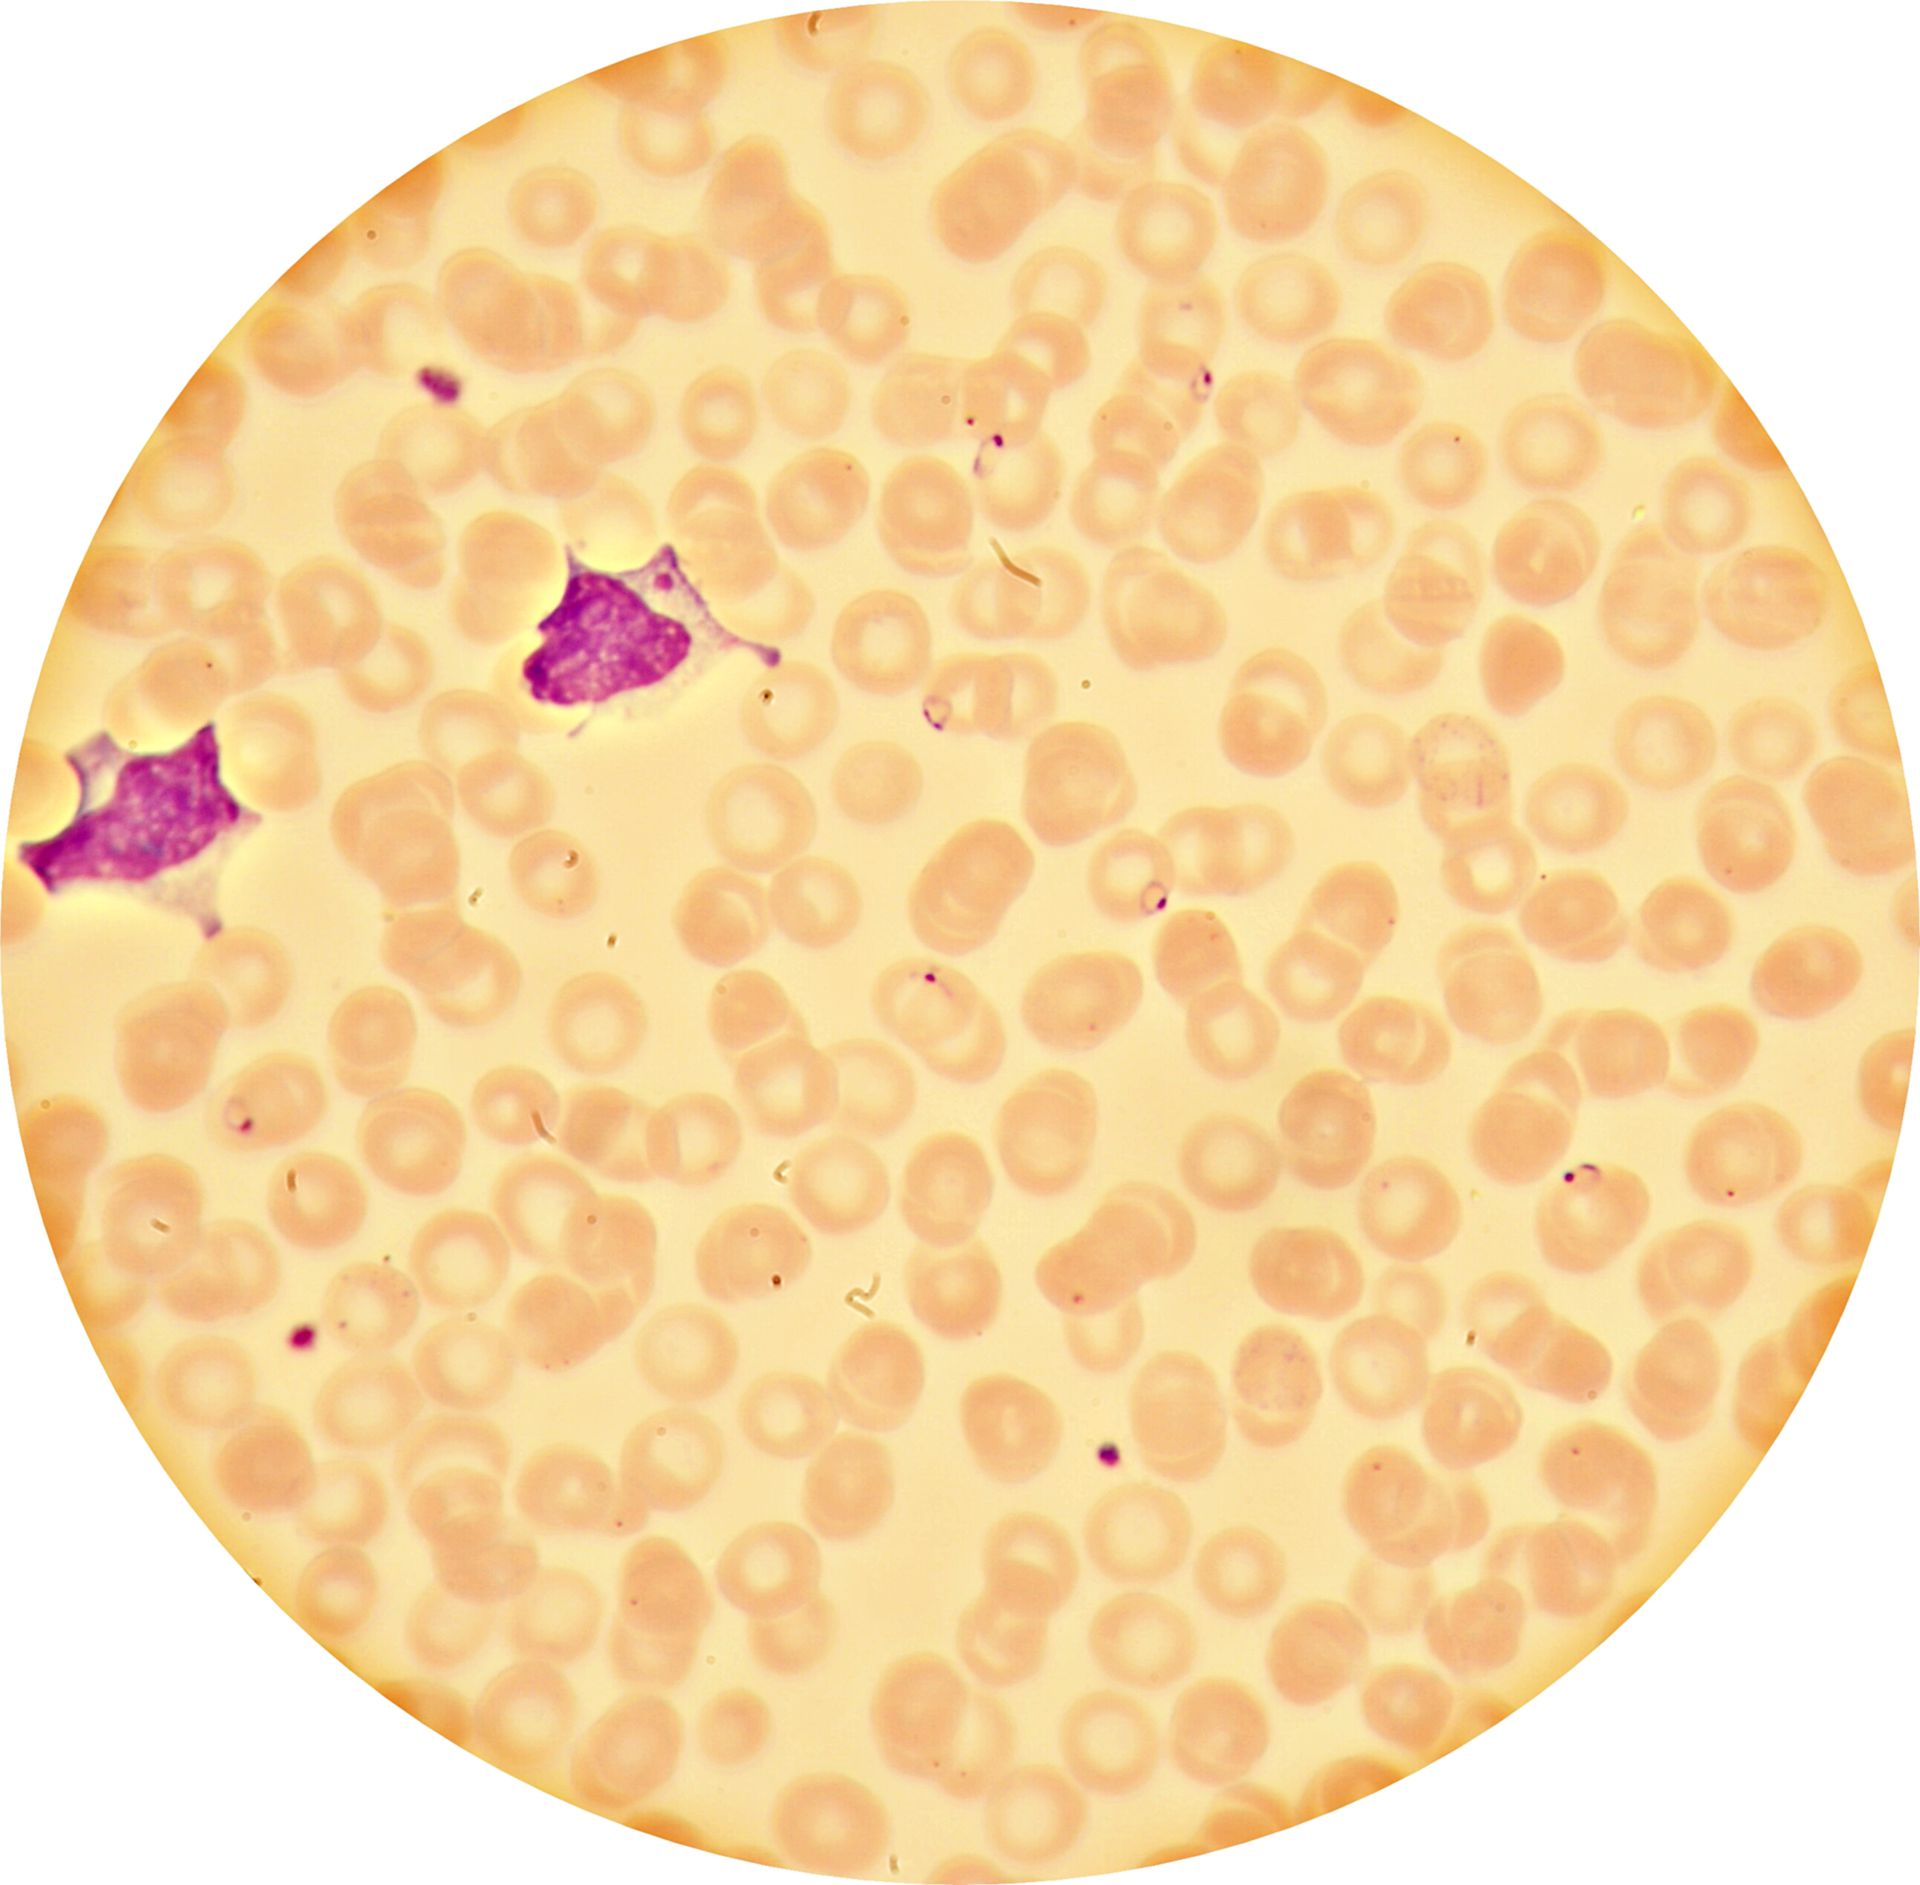 Malaria tropica (Blutausstrich)